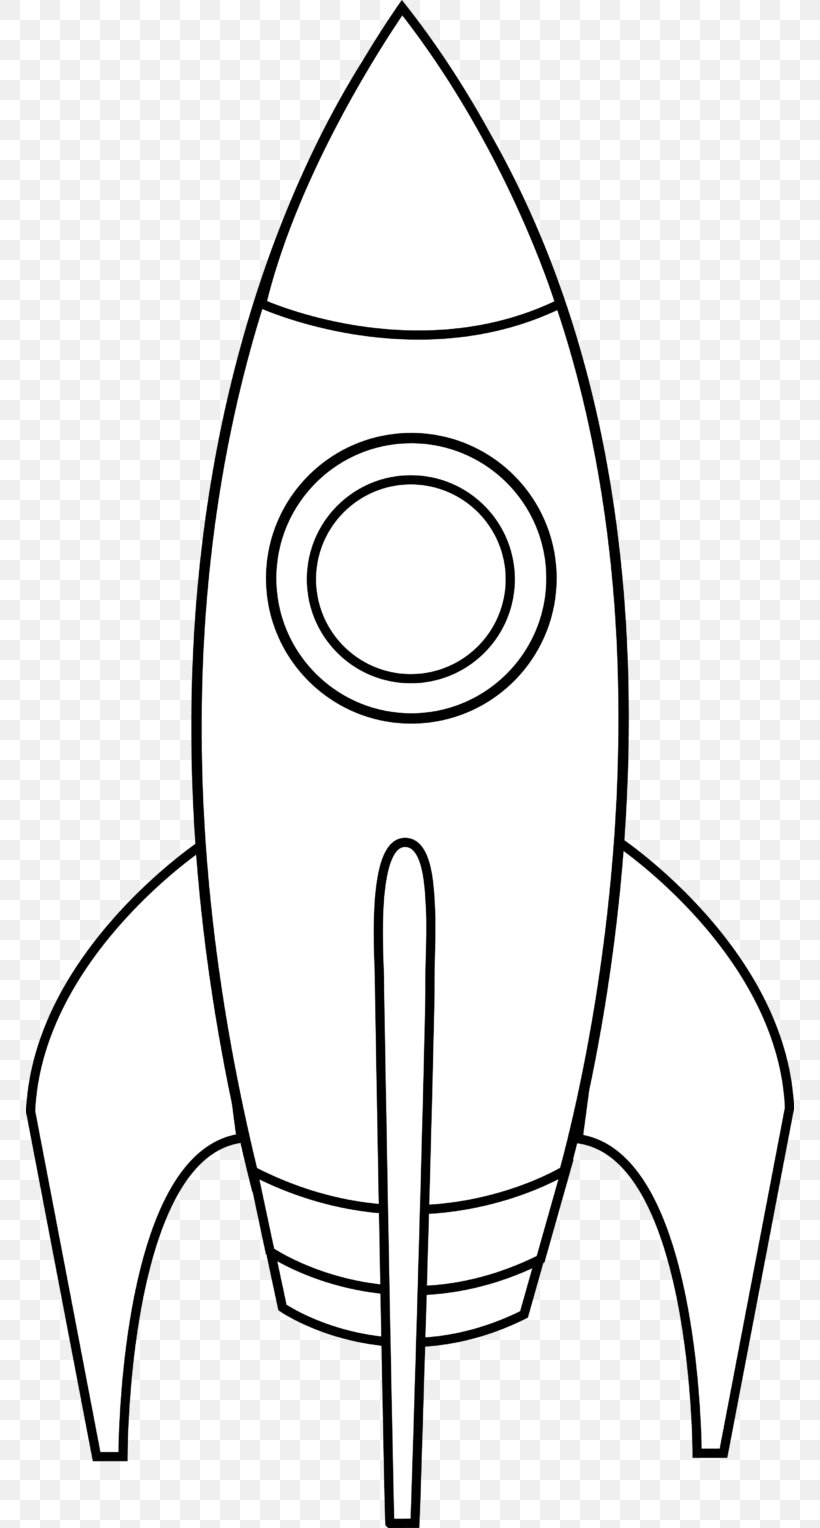 rocket-spacecraft-spaceshipone-black-and-white-clip-art-png